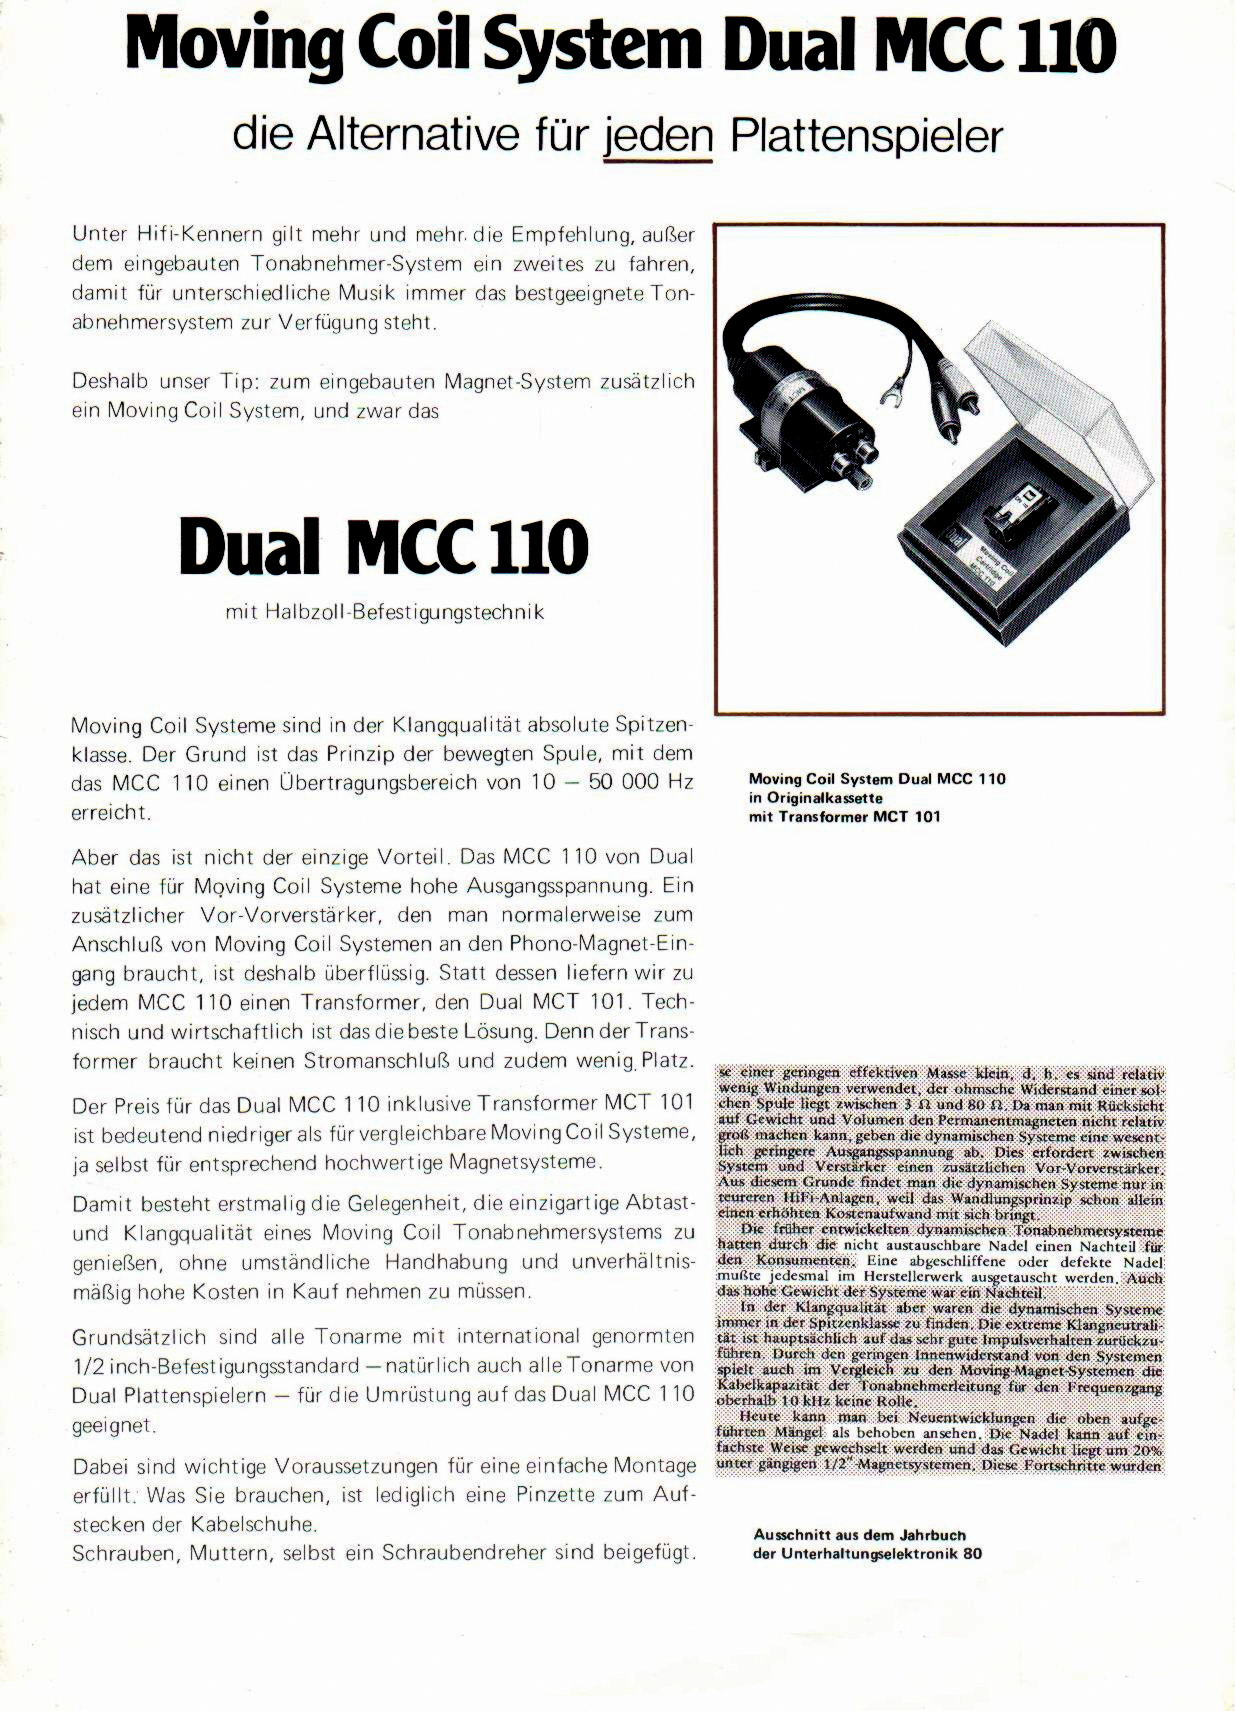 Dual MCC-110-Manual-19811.jpg